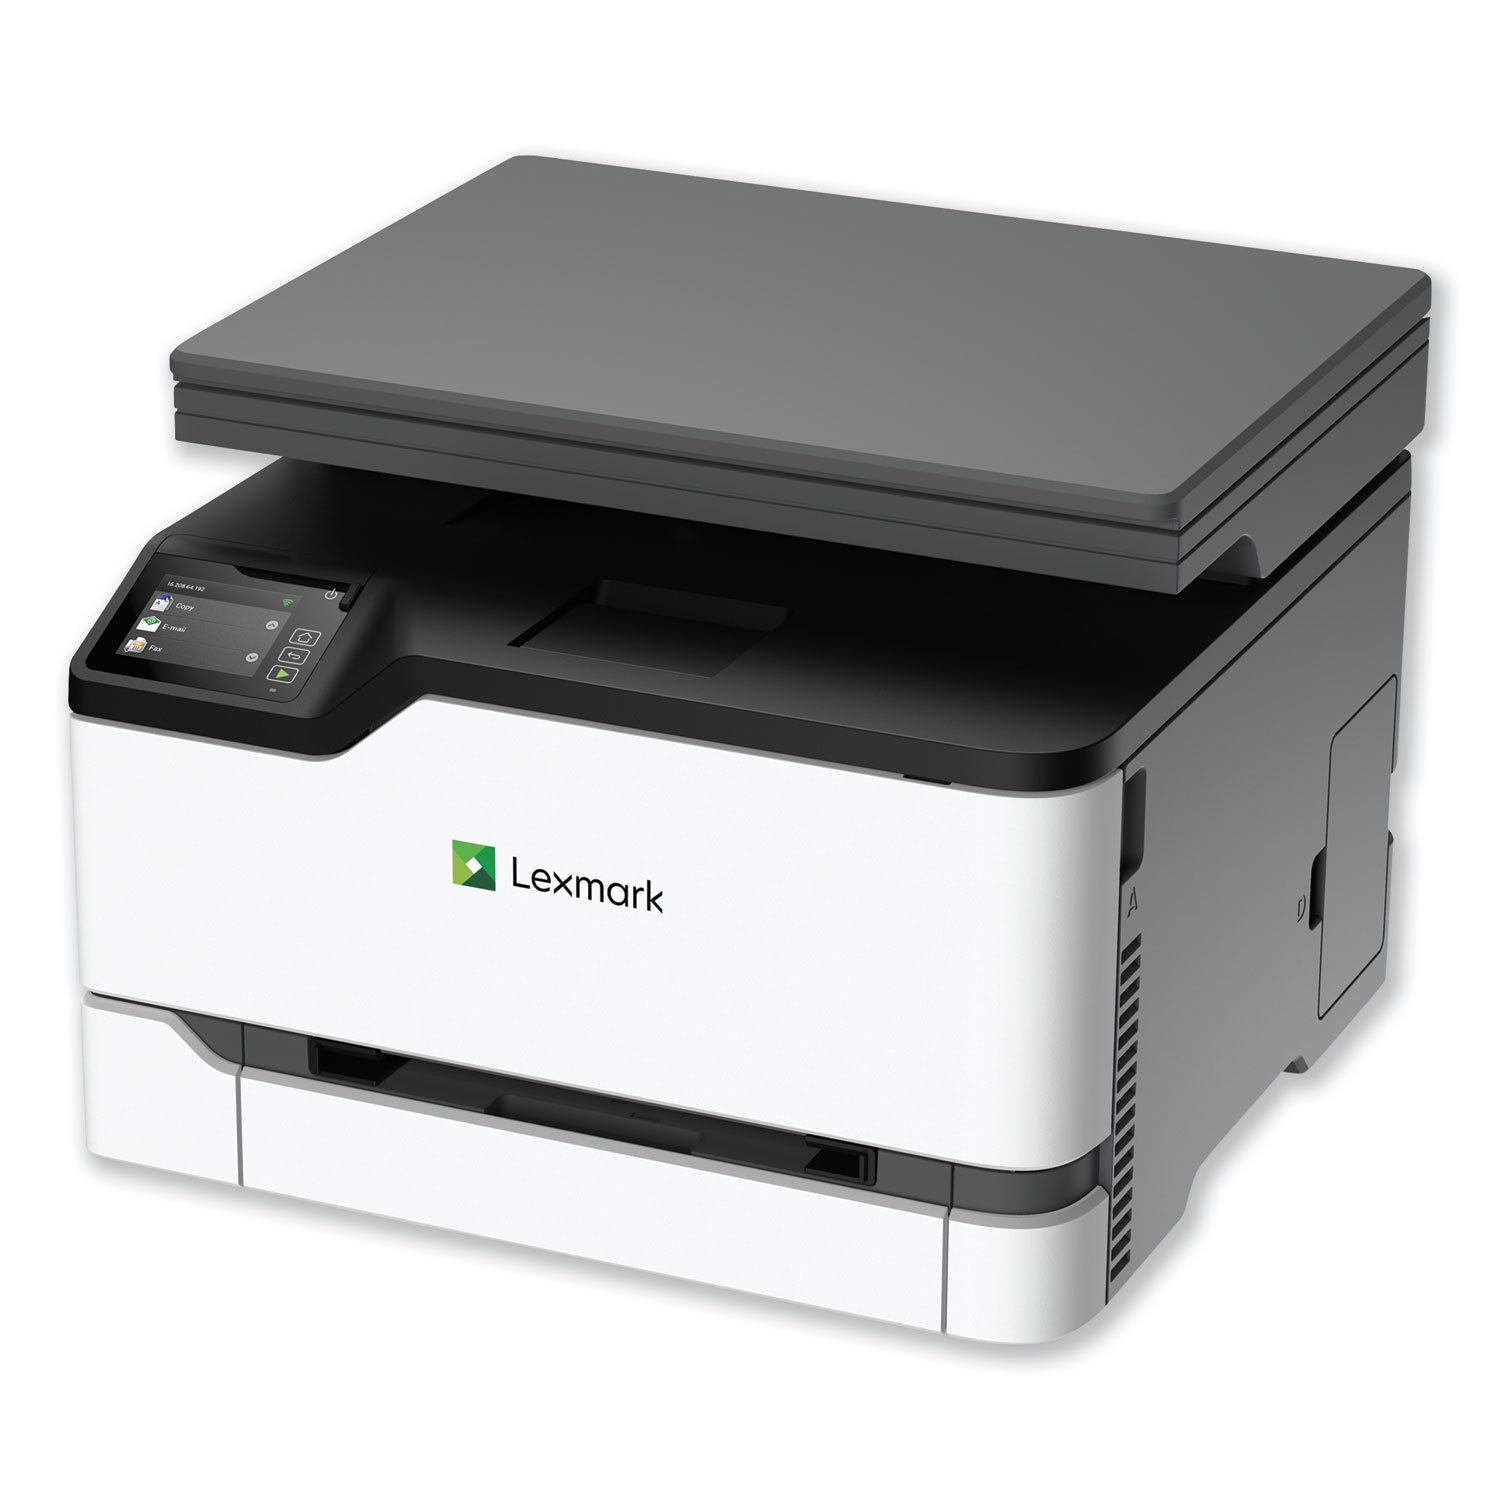  Lexmark 40N9040 MC3224dwe Multifunction Laser Printer, Copy/Print/Scan (LEX40N9040) 